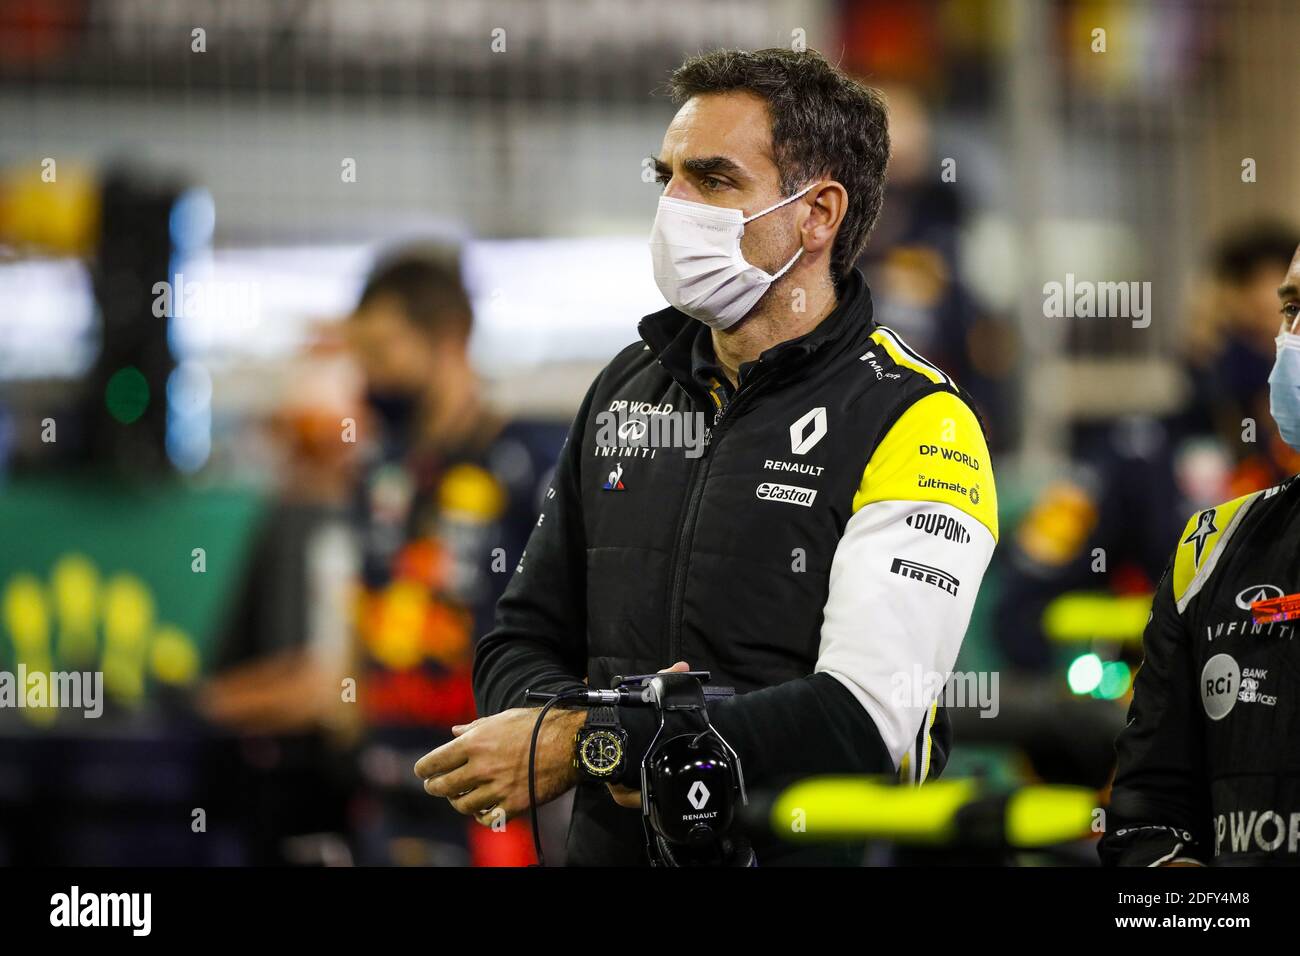 ABITEBOUL Cyril (fr), Managing Director del Team Renault F1, ritratto durante la Formula 1 Rolex Sakhir Grand Prix 2020, da D/LM Foto Stock